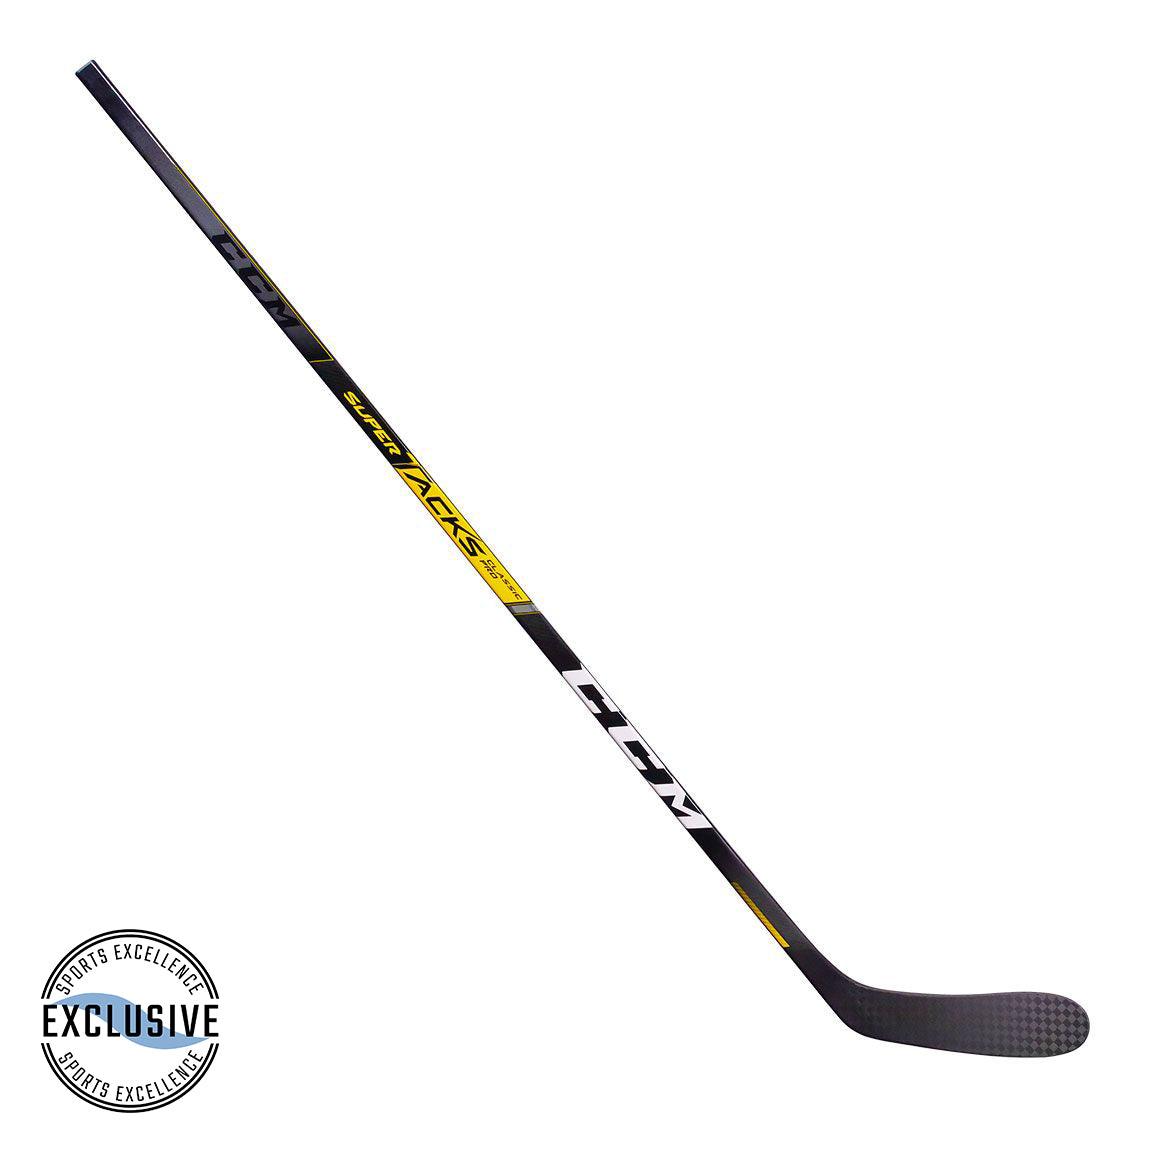 Super Tacks Classic Pro Hockey Stick - Intermediate - Sports Excellence